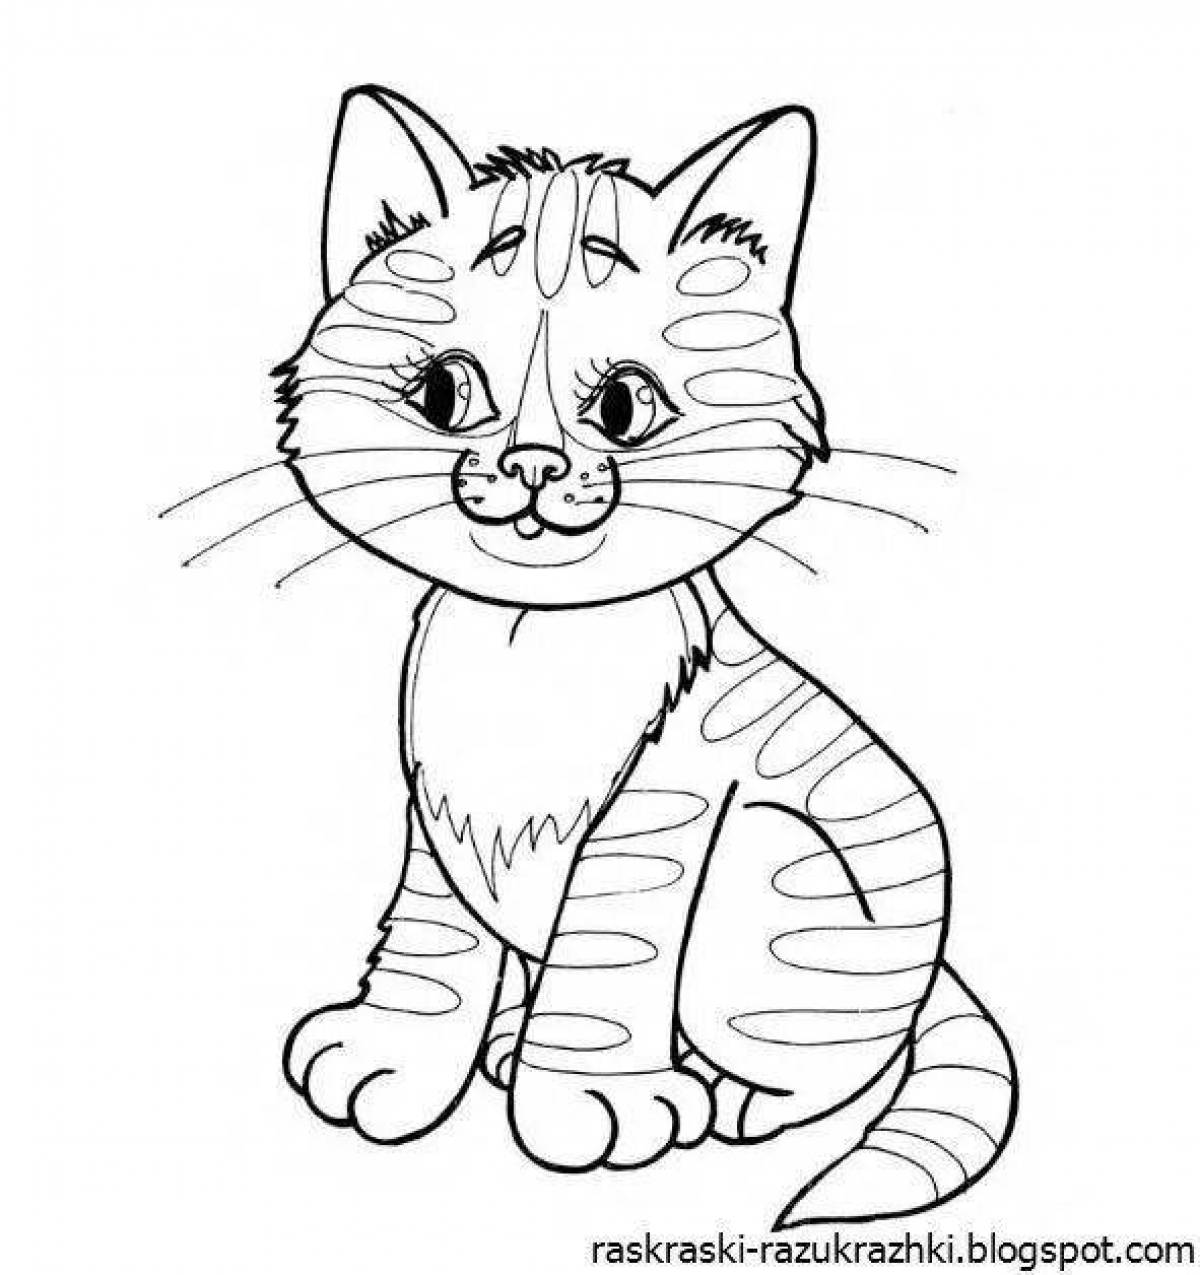 Snuggly coloring page cat для детей 4-5 лет